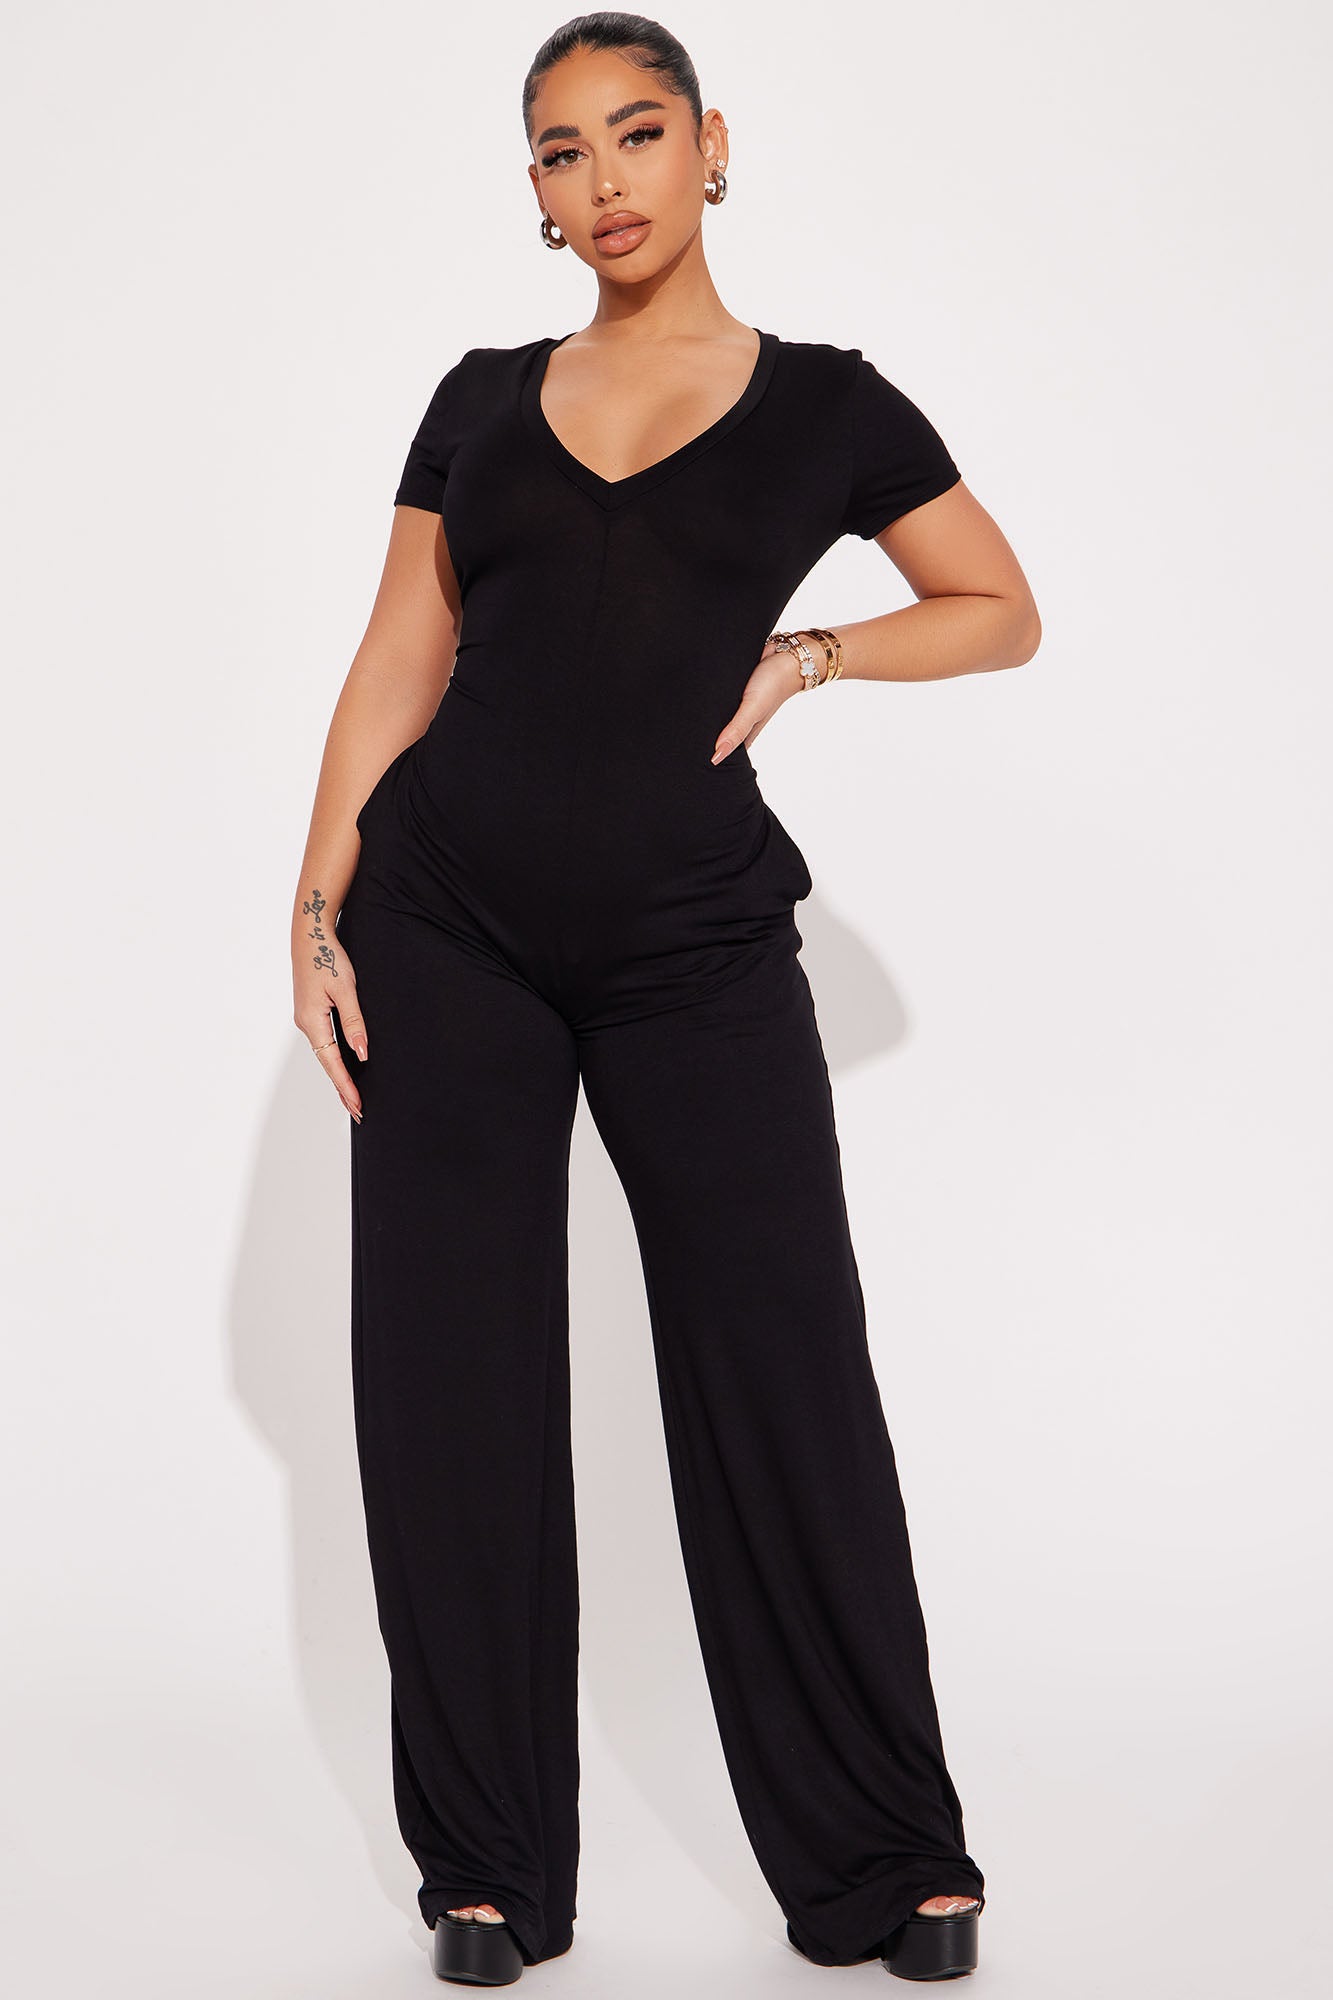 Black is so flattering & perfect for an everyday sleek look🖤 #oeakjum, jumpsuit